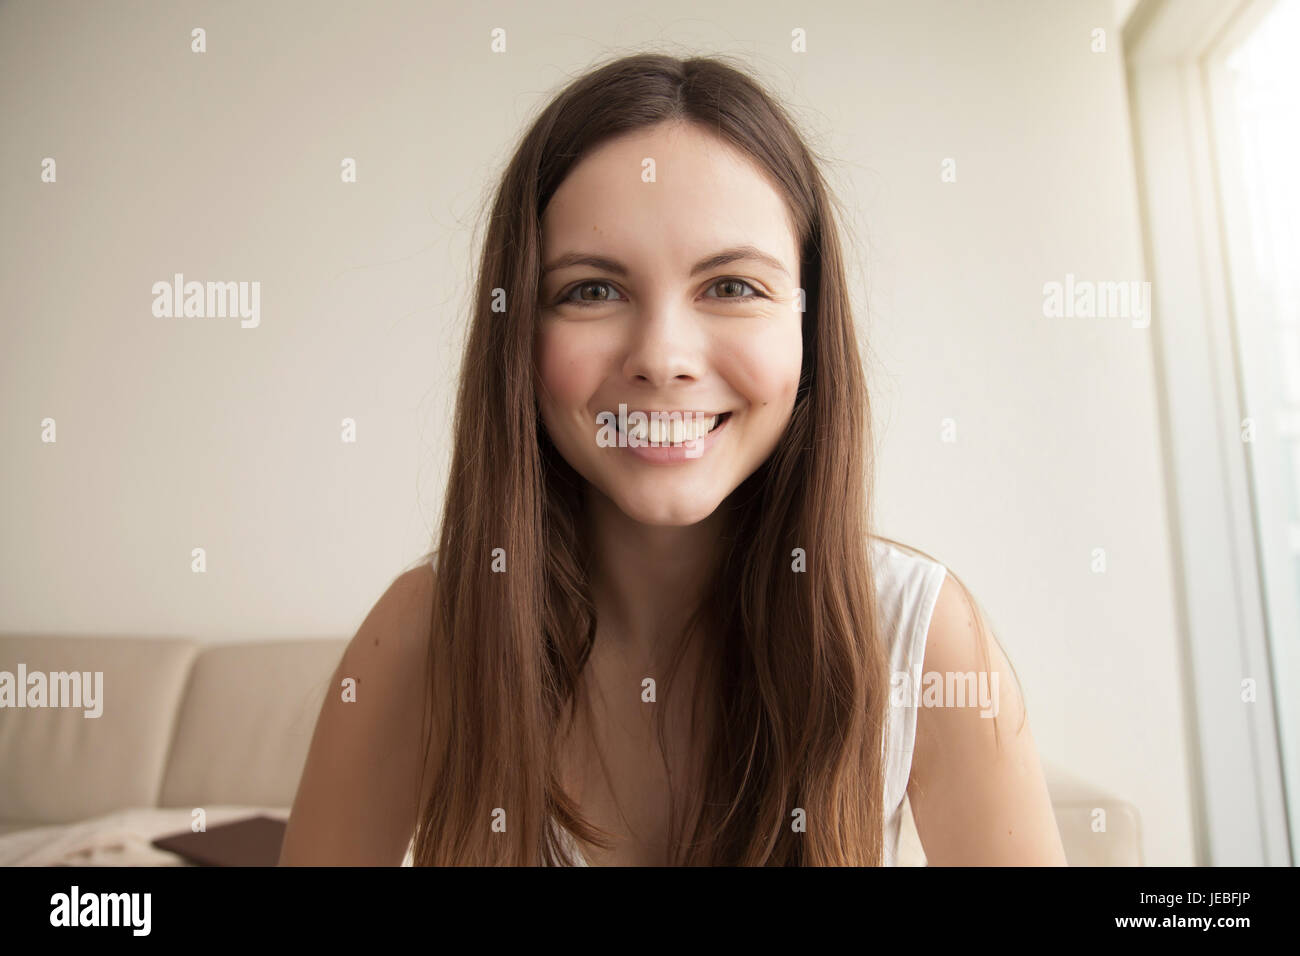 Emotive headshot portrait of smiling young woman Stock Photo